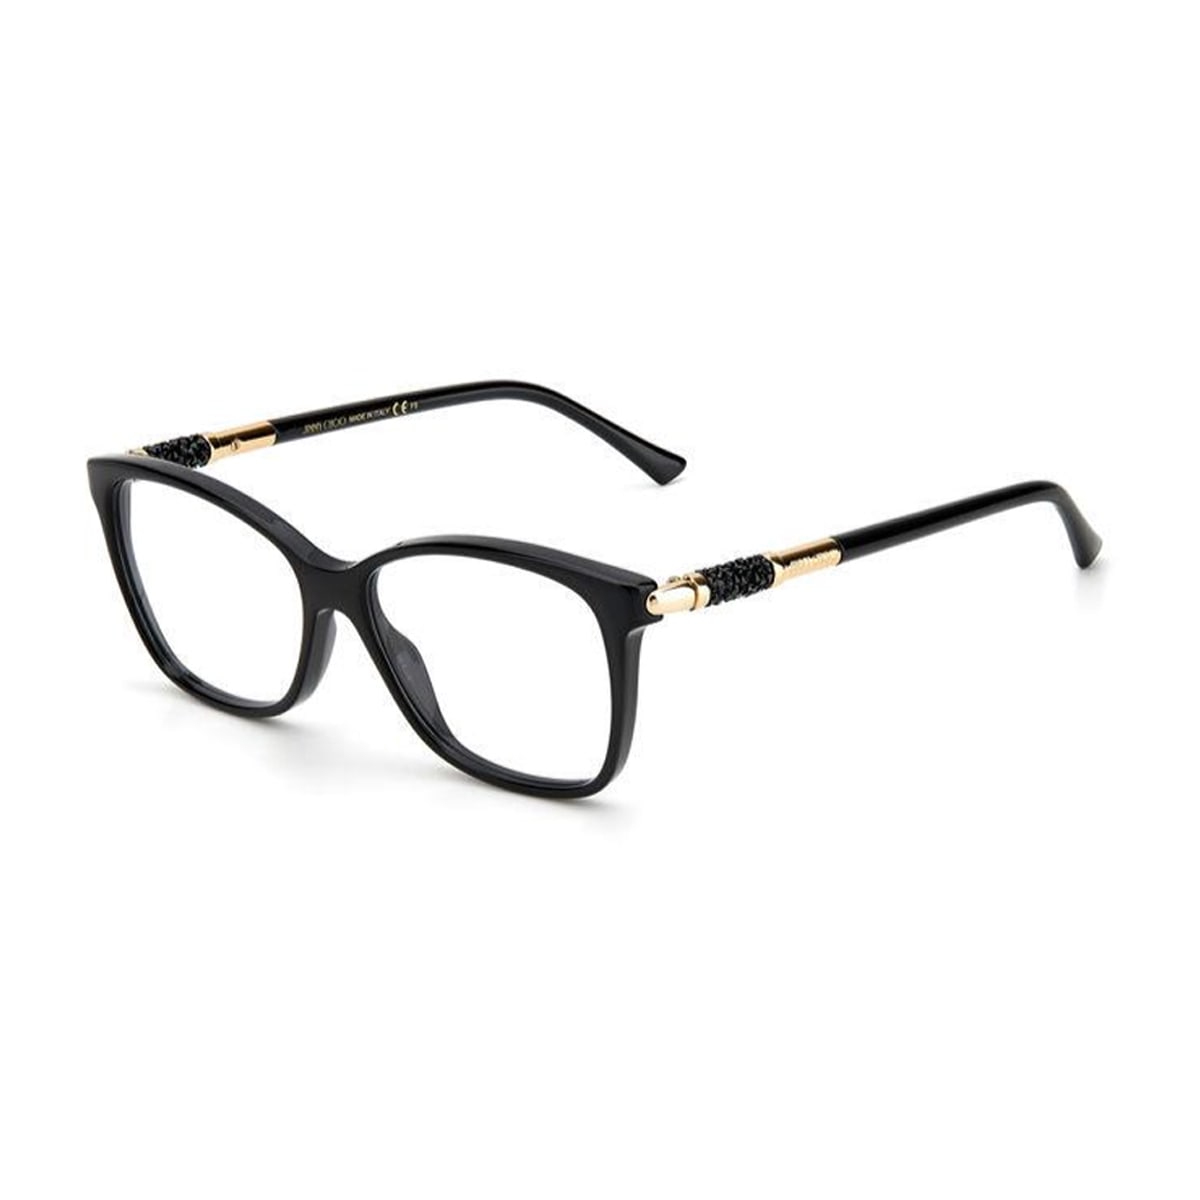 Jimmy Choo Eyewear Jc292 807 Glasses